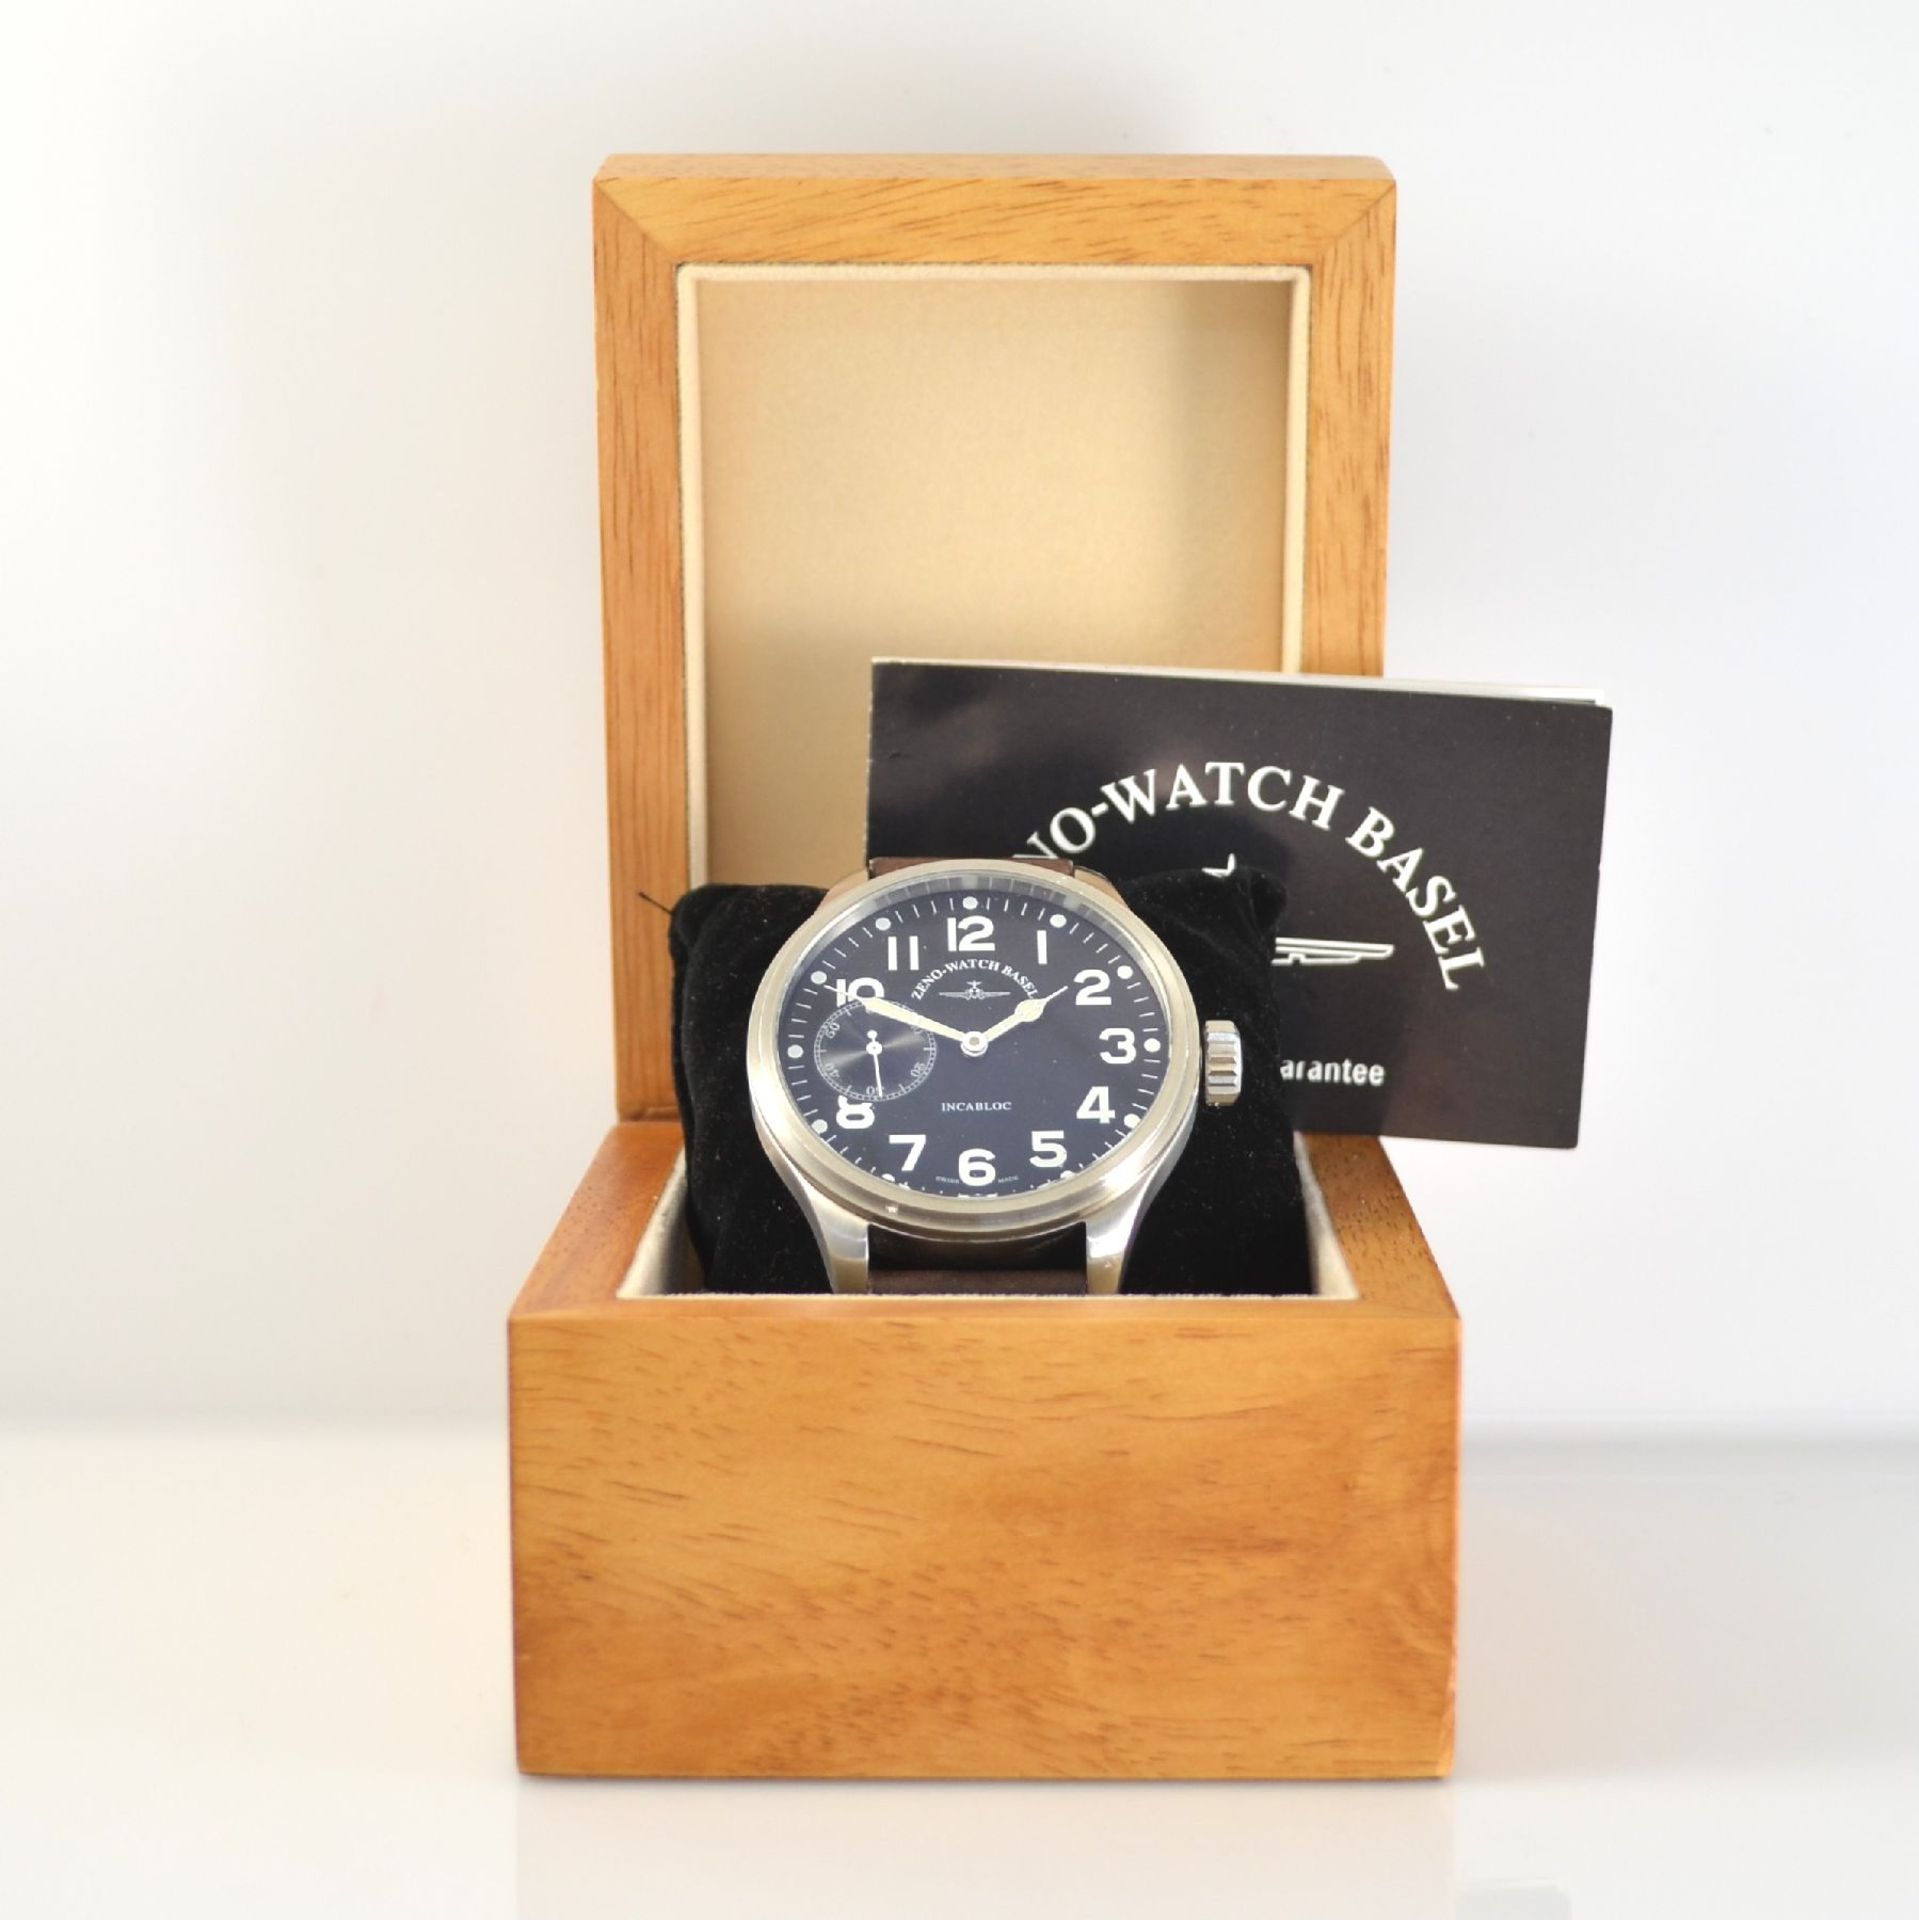 ZENO-WATCH BASEL Pilot big gents wristwatch, Switzerland sold in May 2006 according to warranty - Bild 7 aus 7